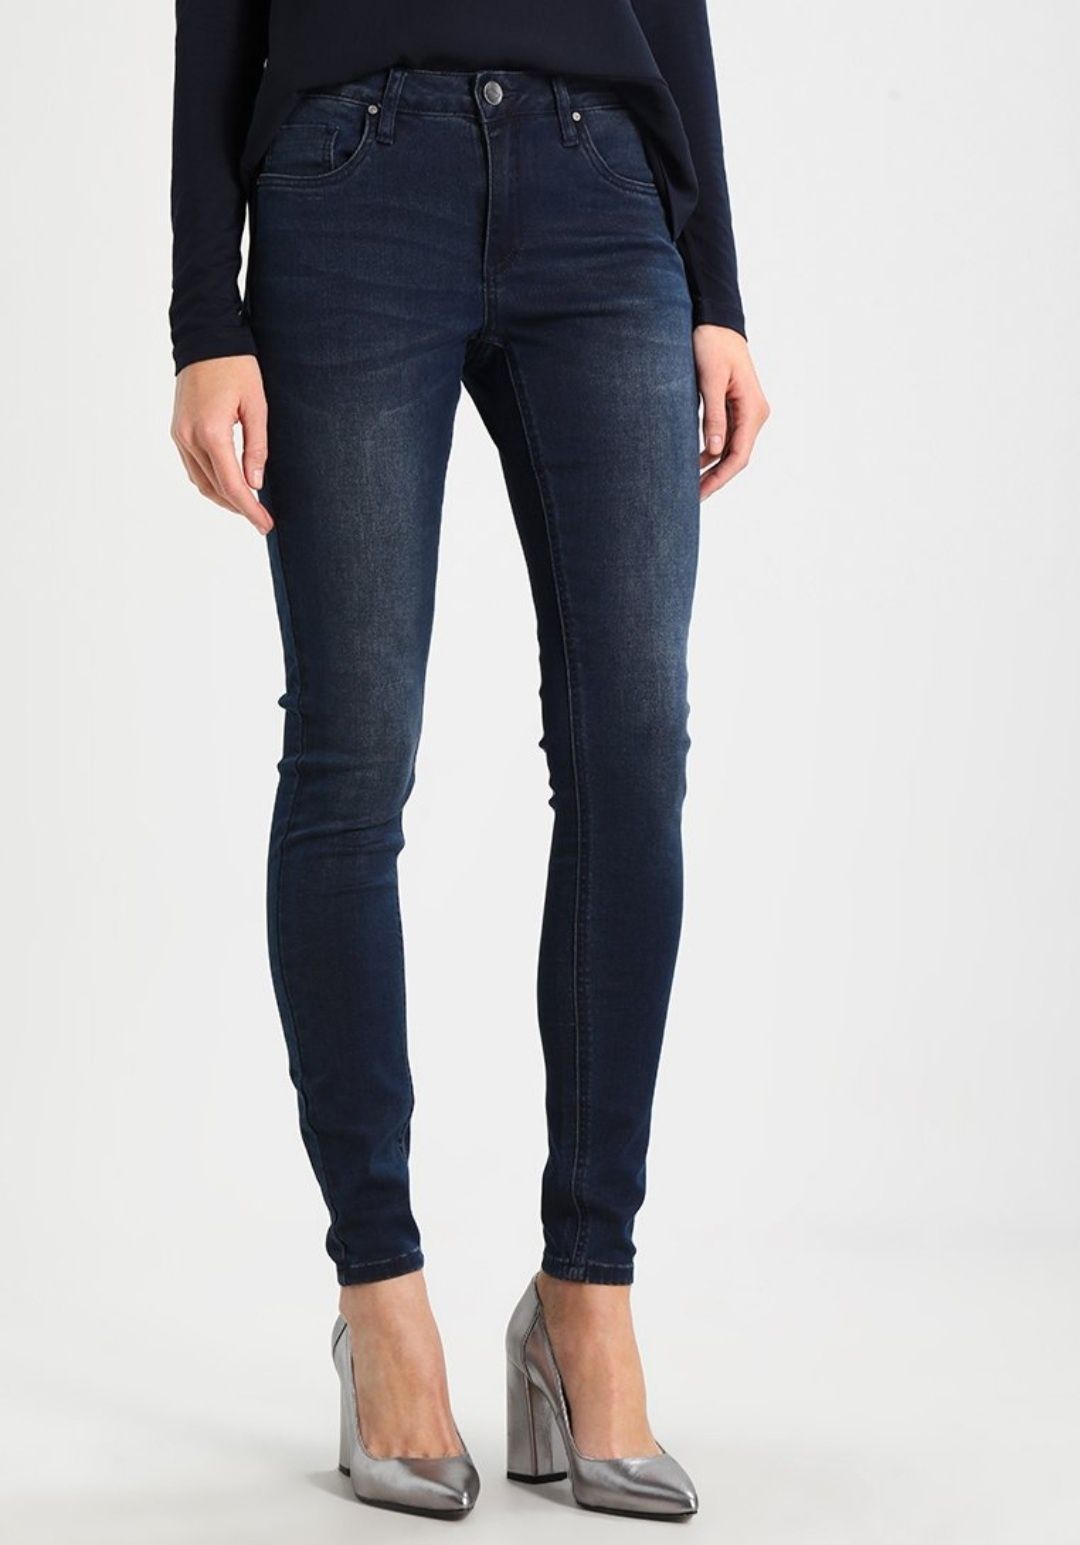 Granatowe jeansy dżinsy Kaffe Grace Slim Fit roz. 32/30 XL/42